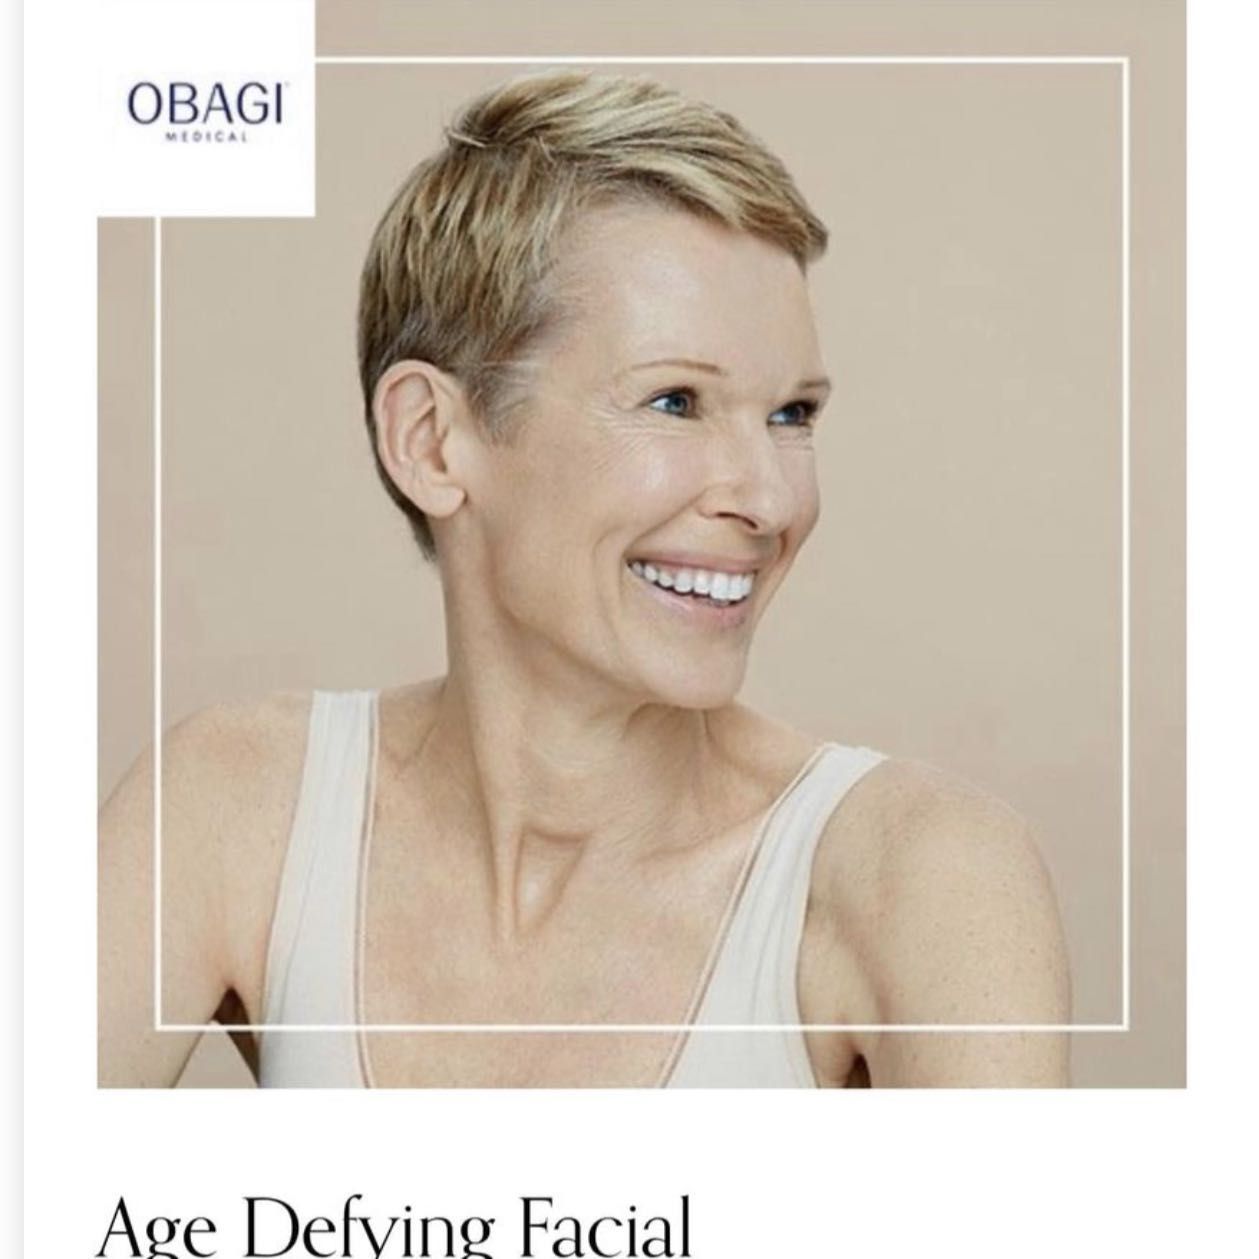 Obagi Age Defying Facial portfolio